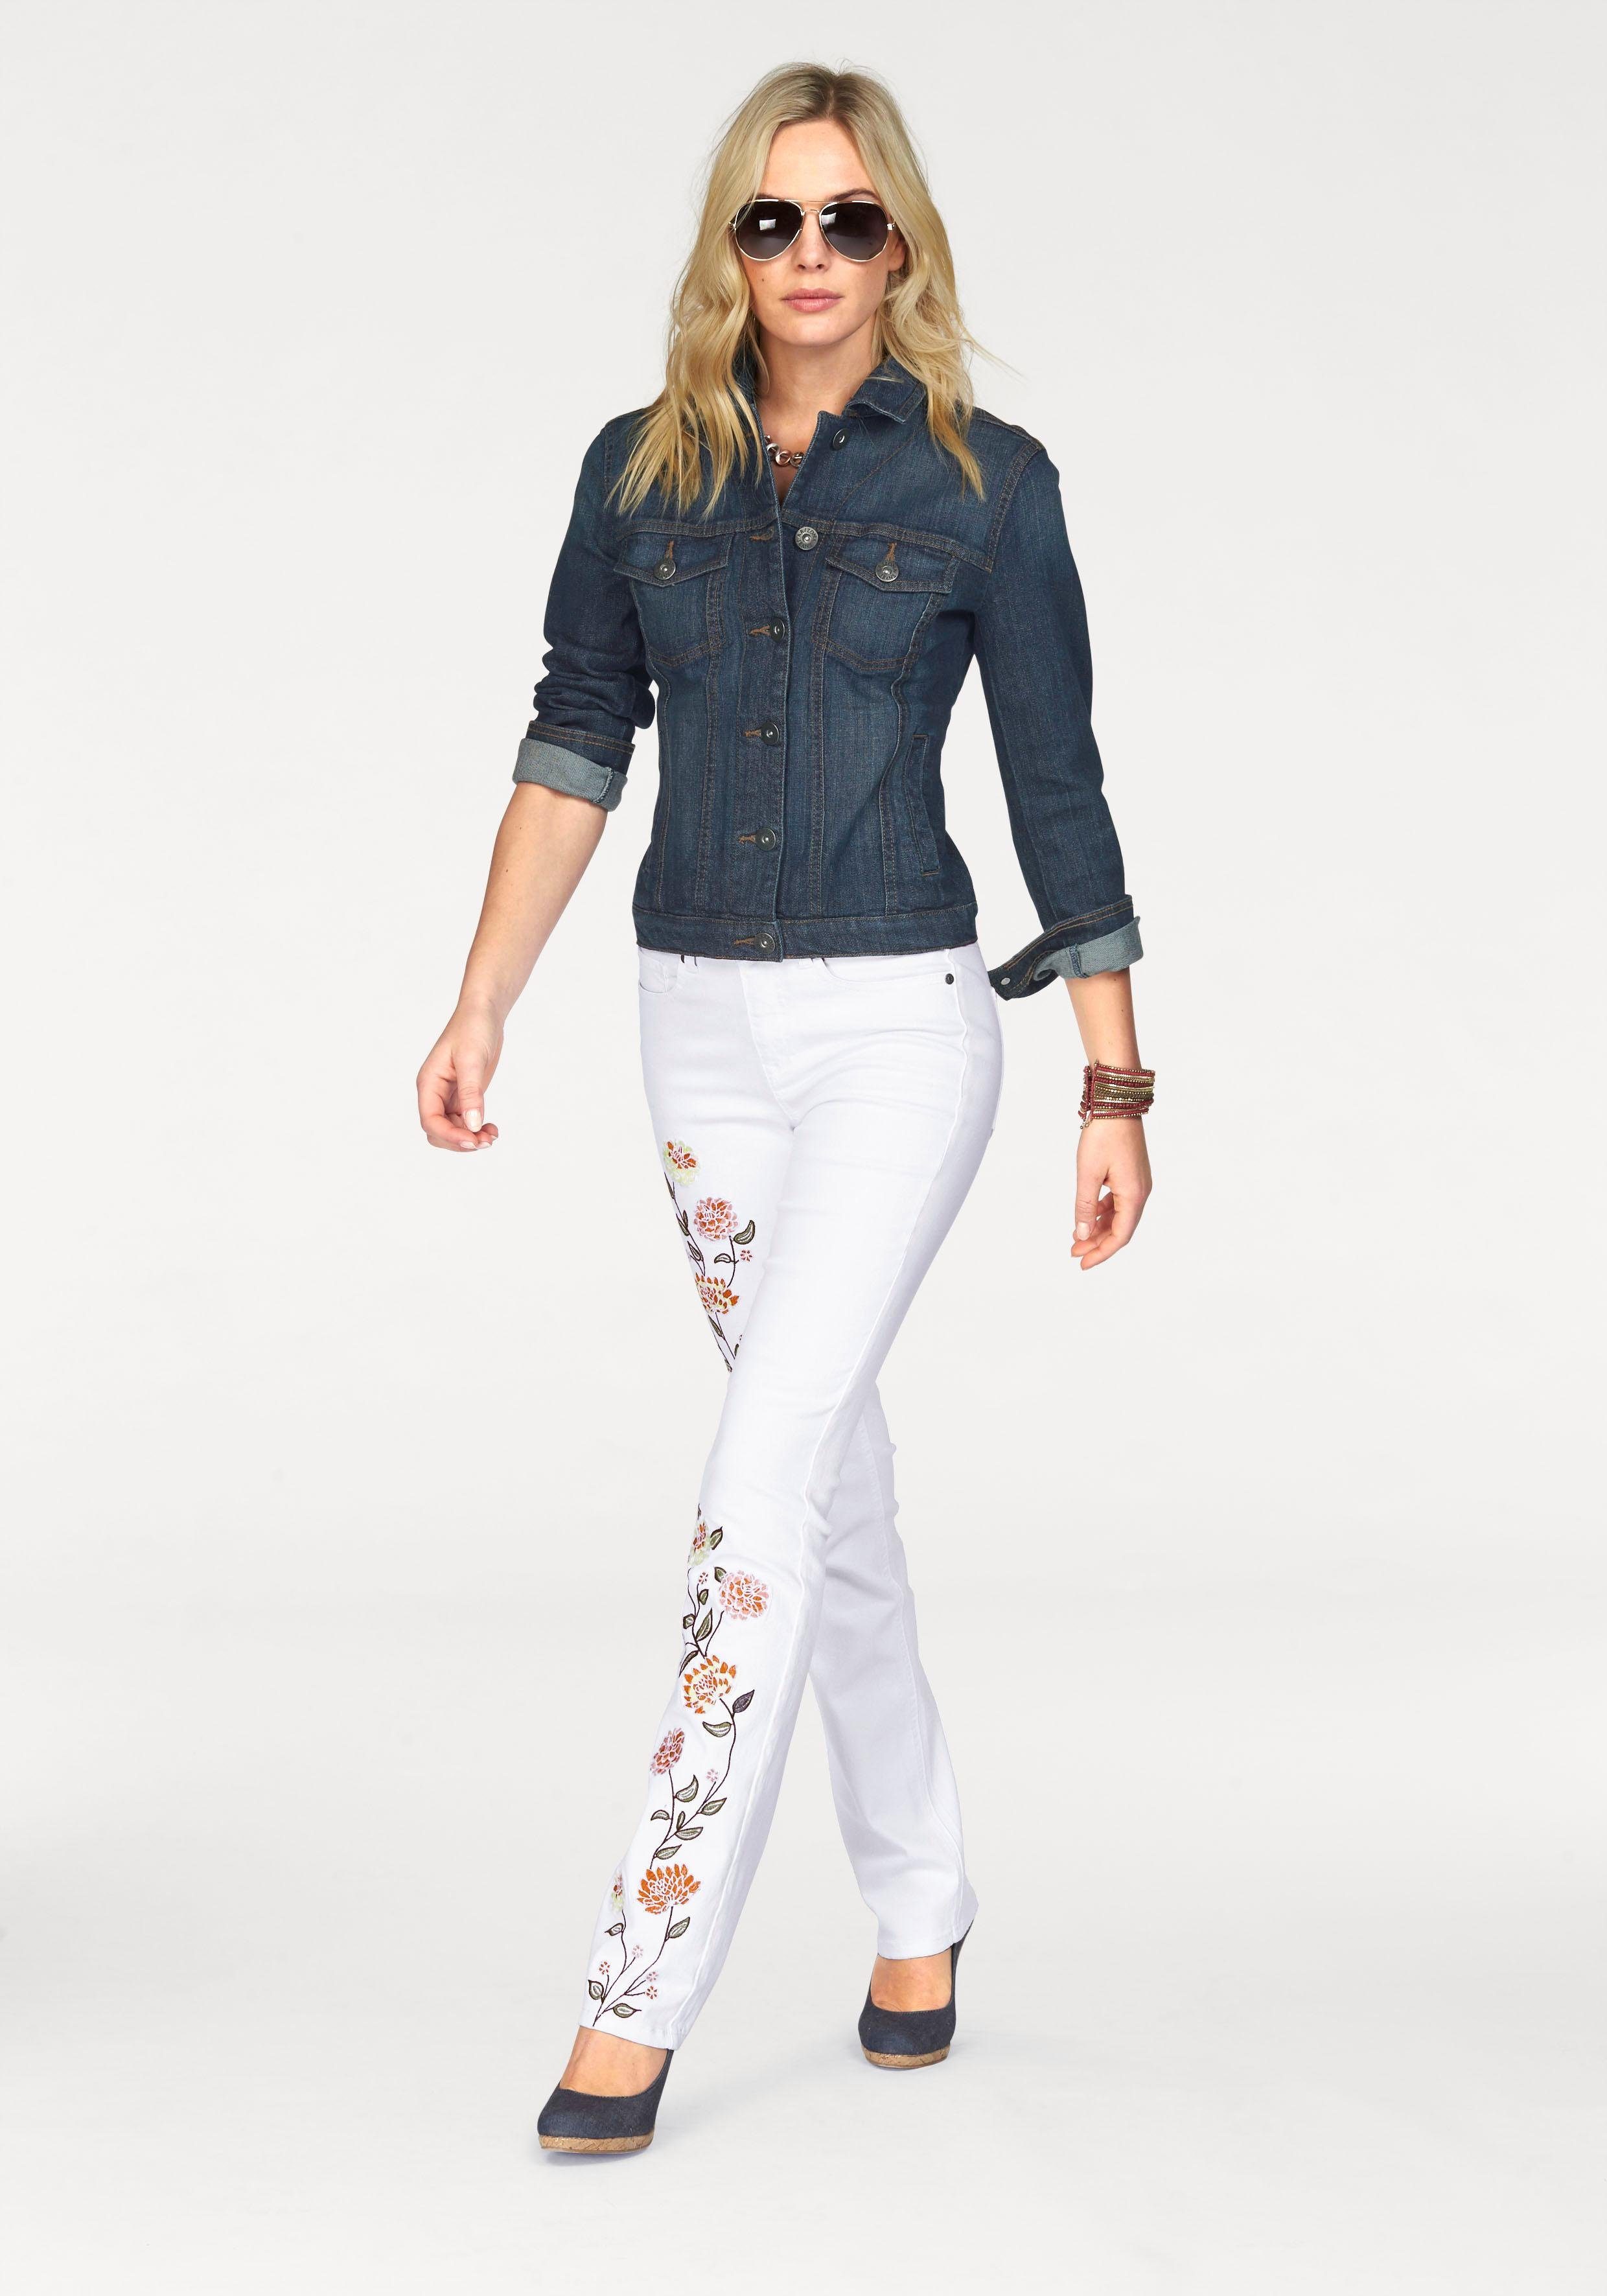 Arizona elastischem aus Jeansjacke im Denim klassischem Stil